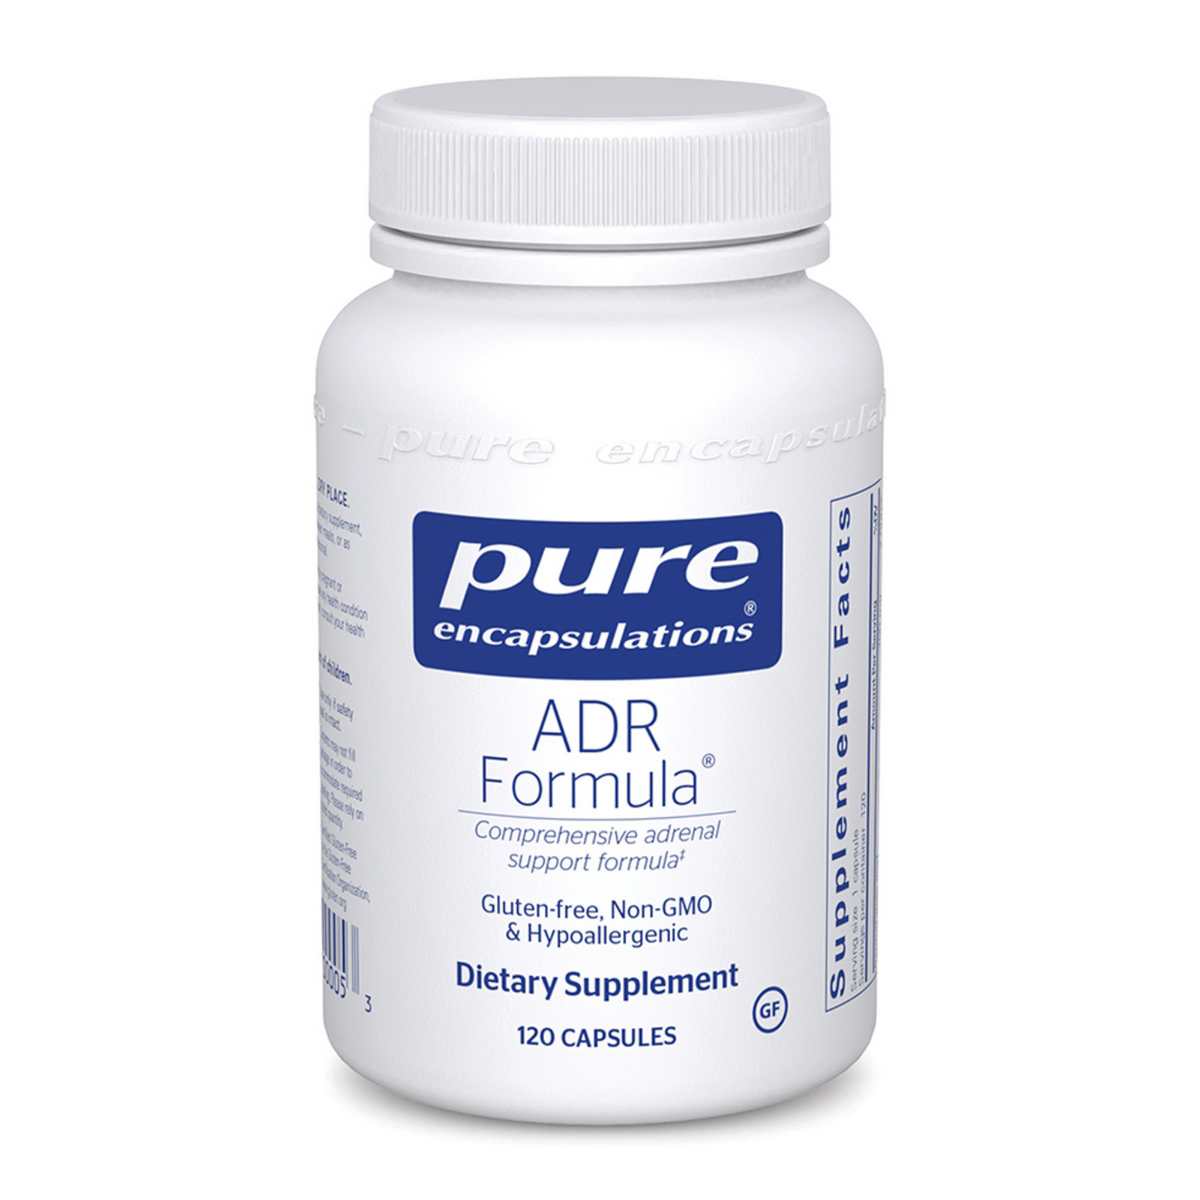 Primary Image of Pure Encapsulations ADR Formula Capsules (120 count)